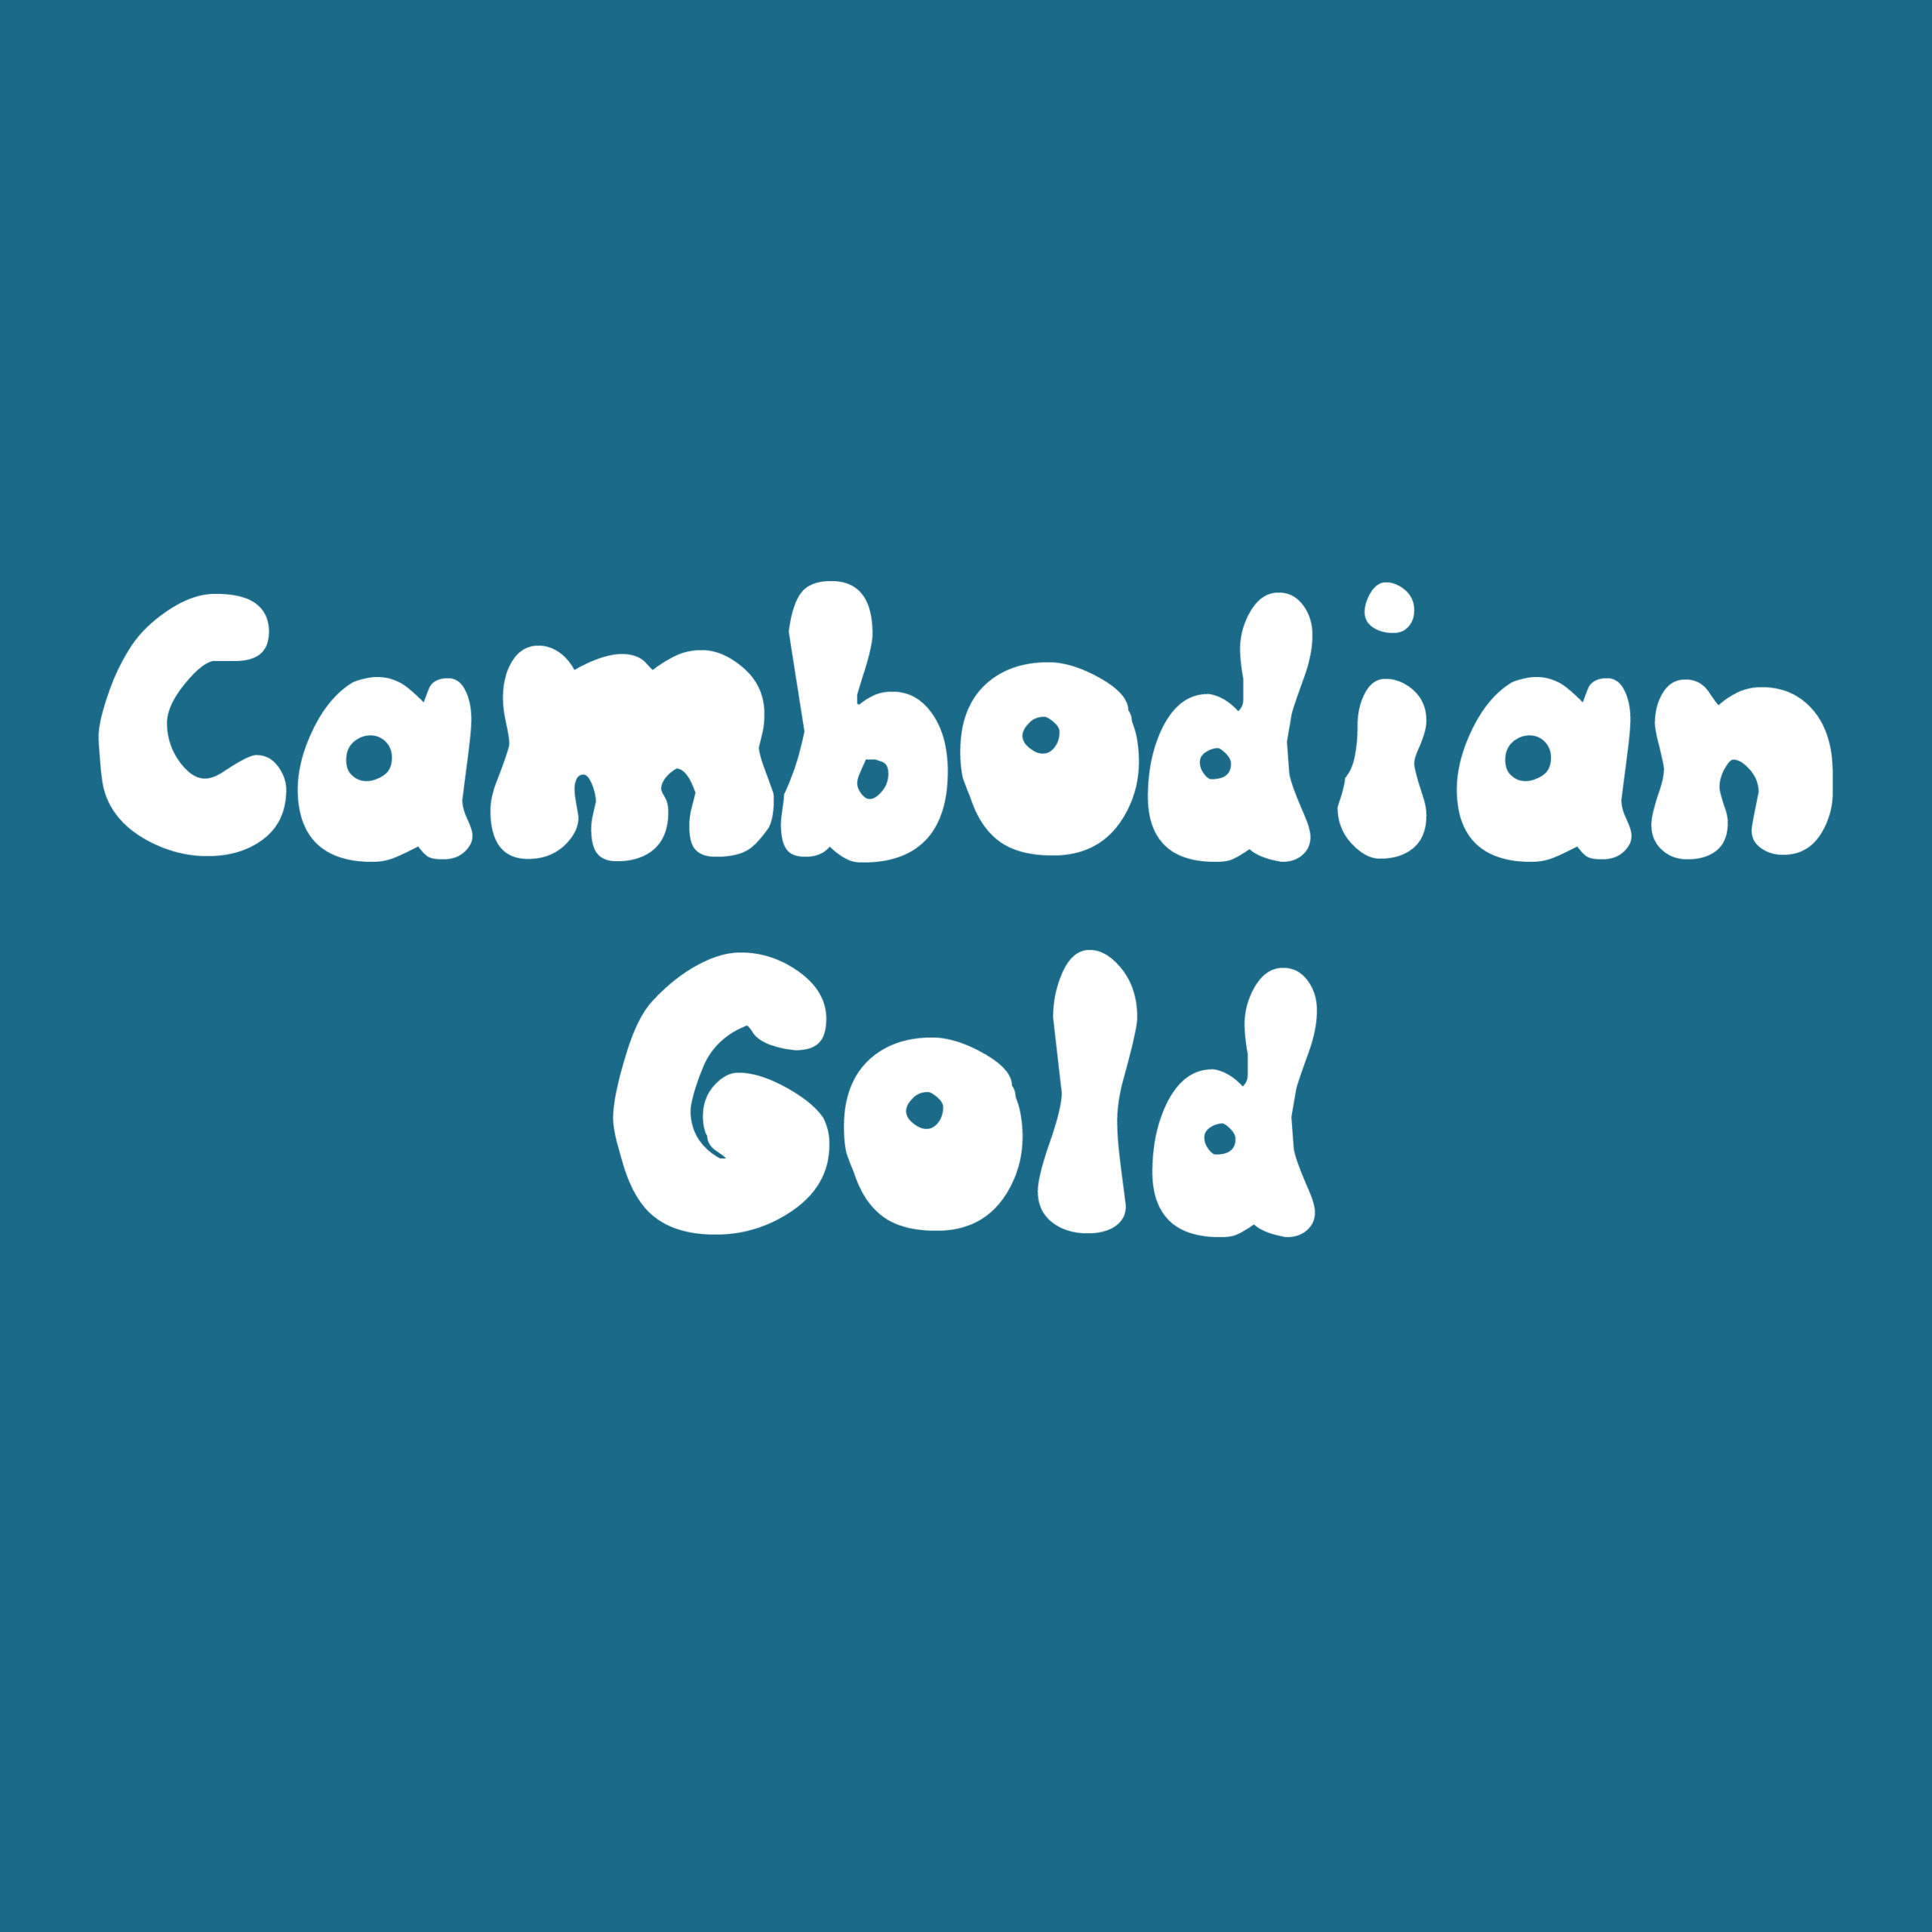 psilocybe cubensis var "cambodian Gold" spore swab or spore print